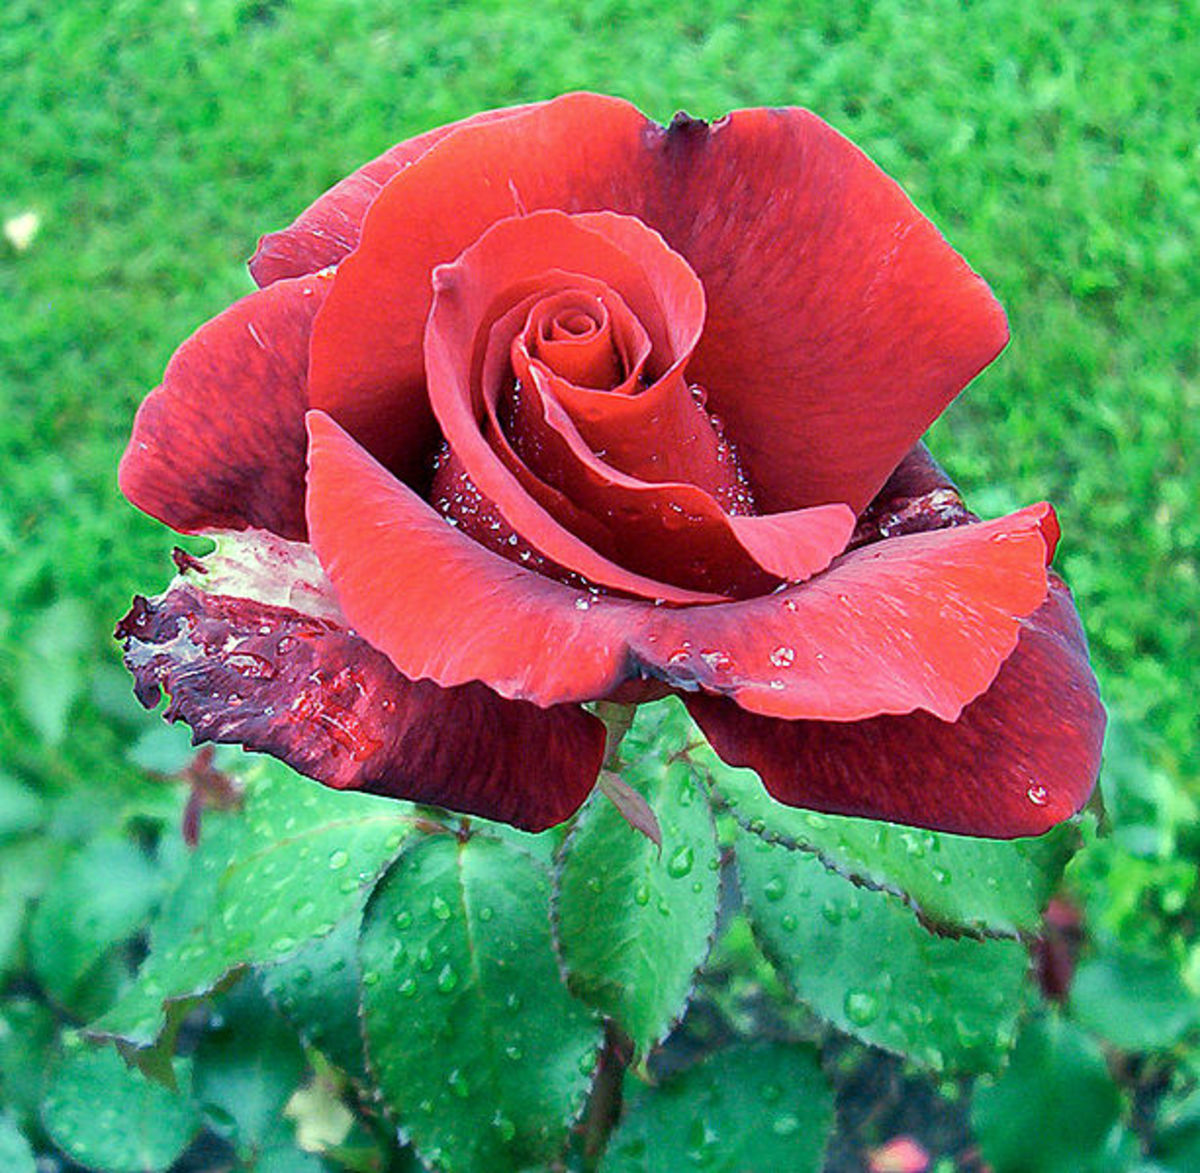 File: Rose-rr Festung Koenigstein.jpg A red rose, sprinkled with dew drops  Author: C.D. Schmidt